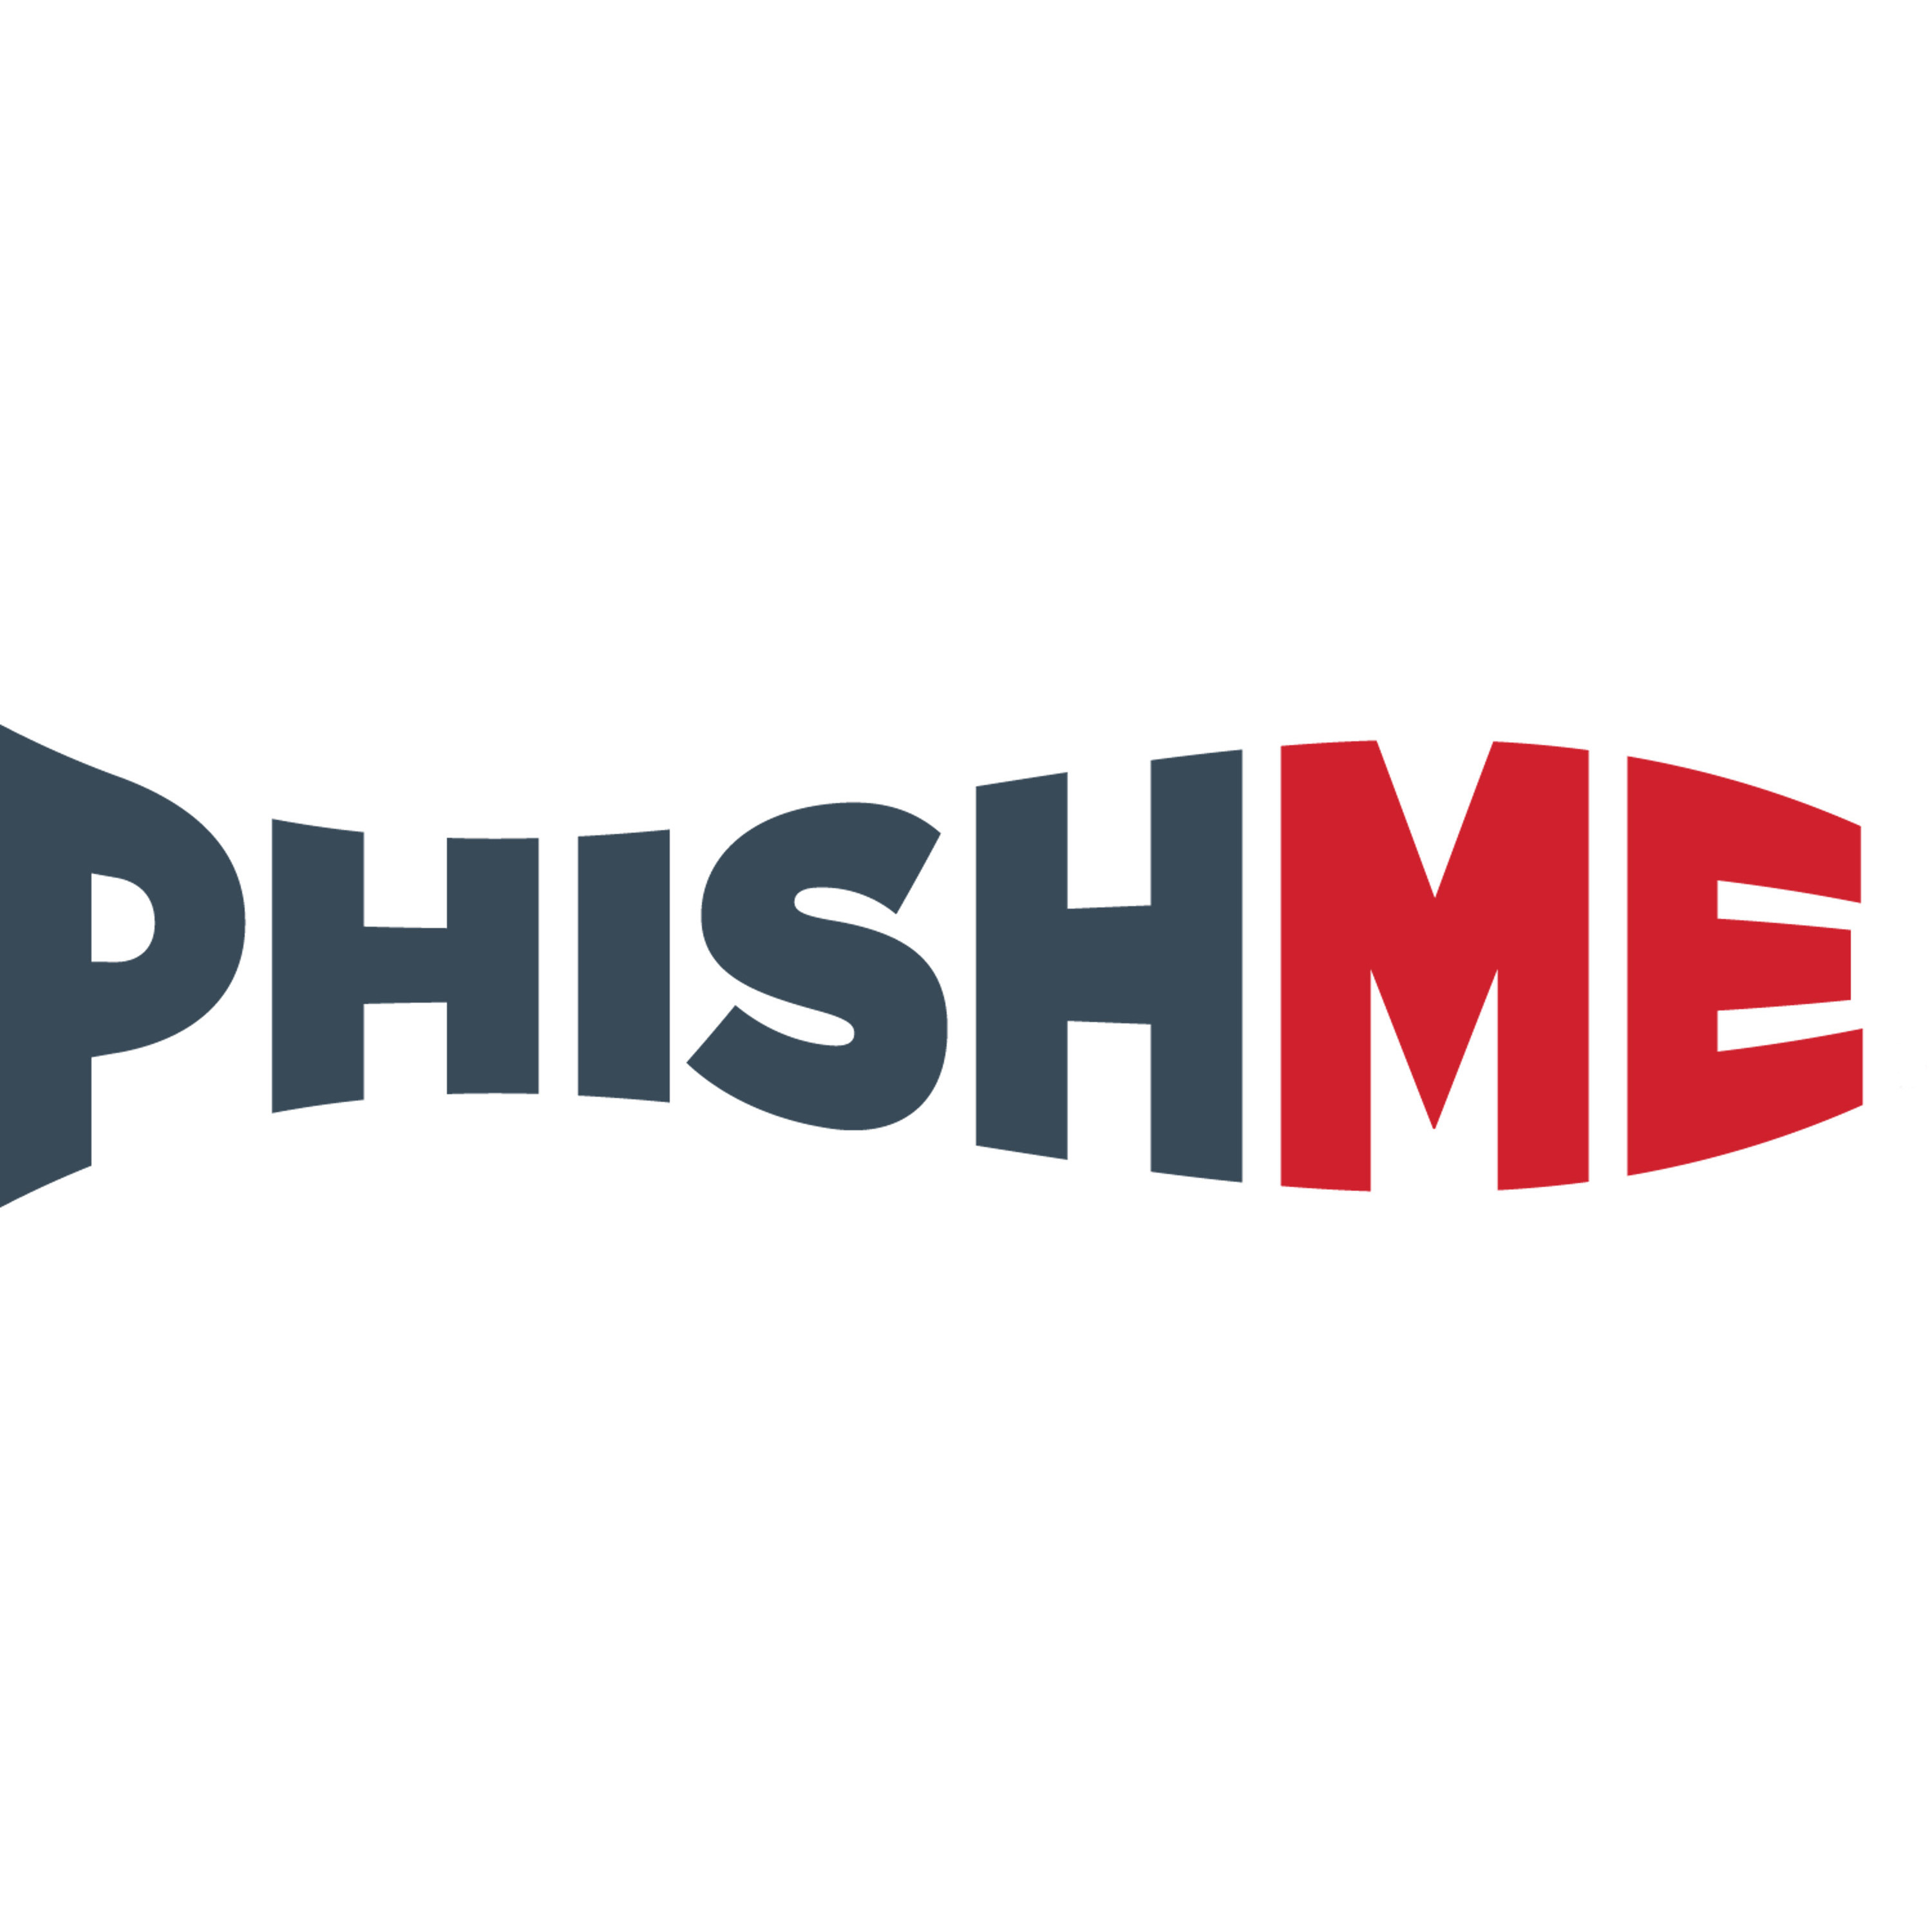 PhishMe campaign